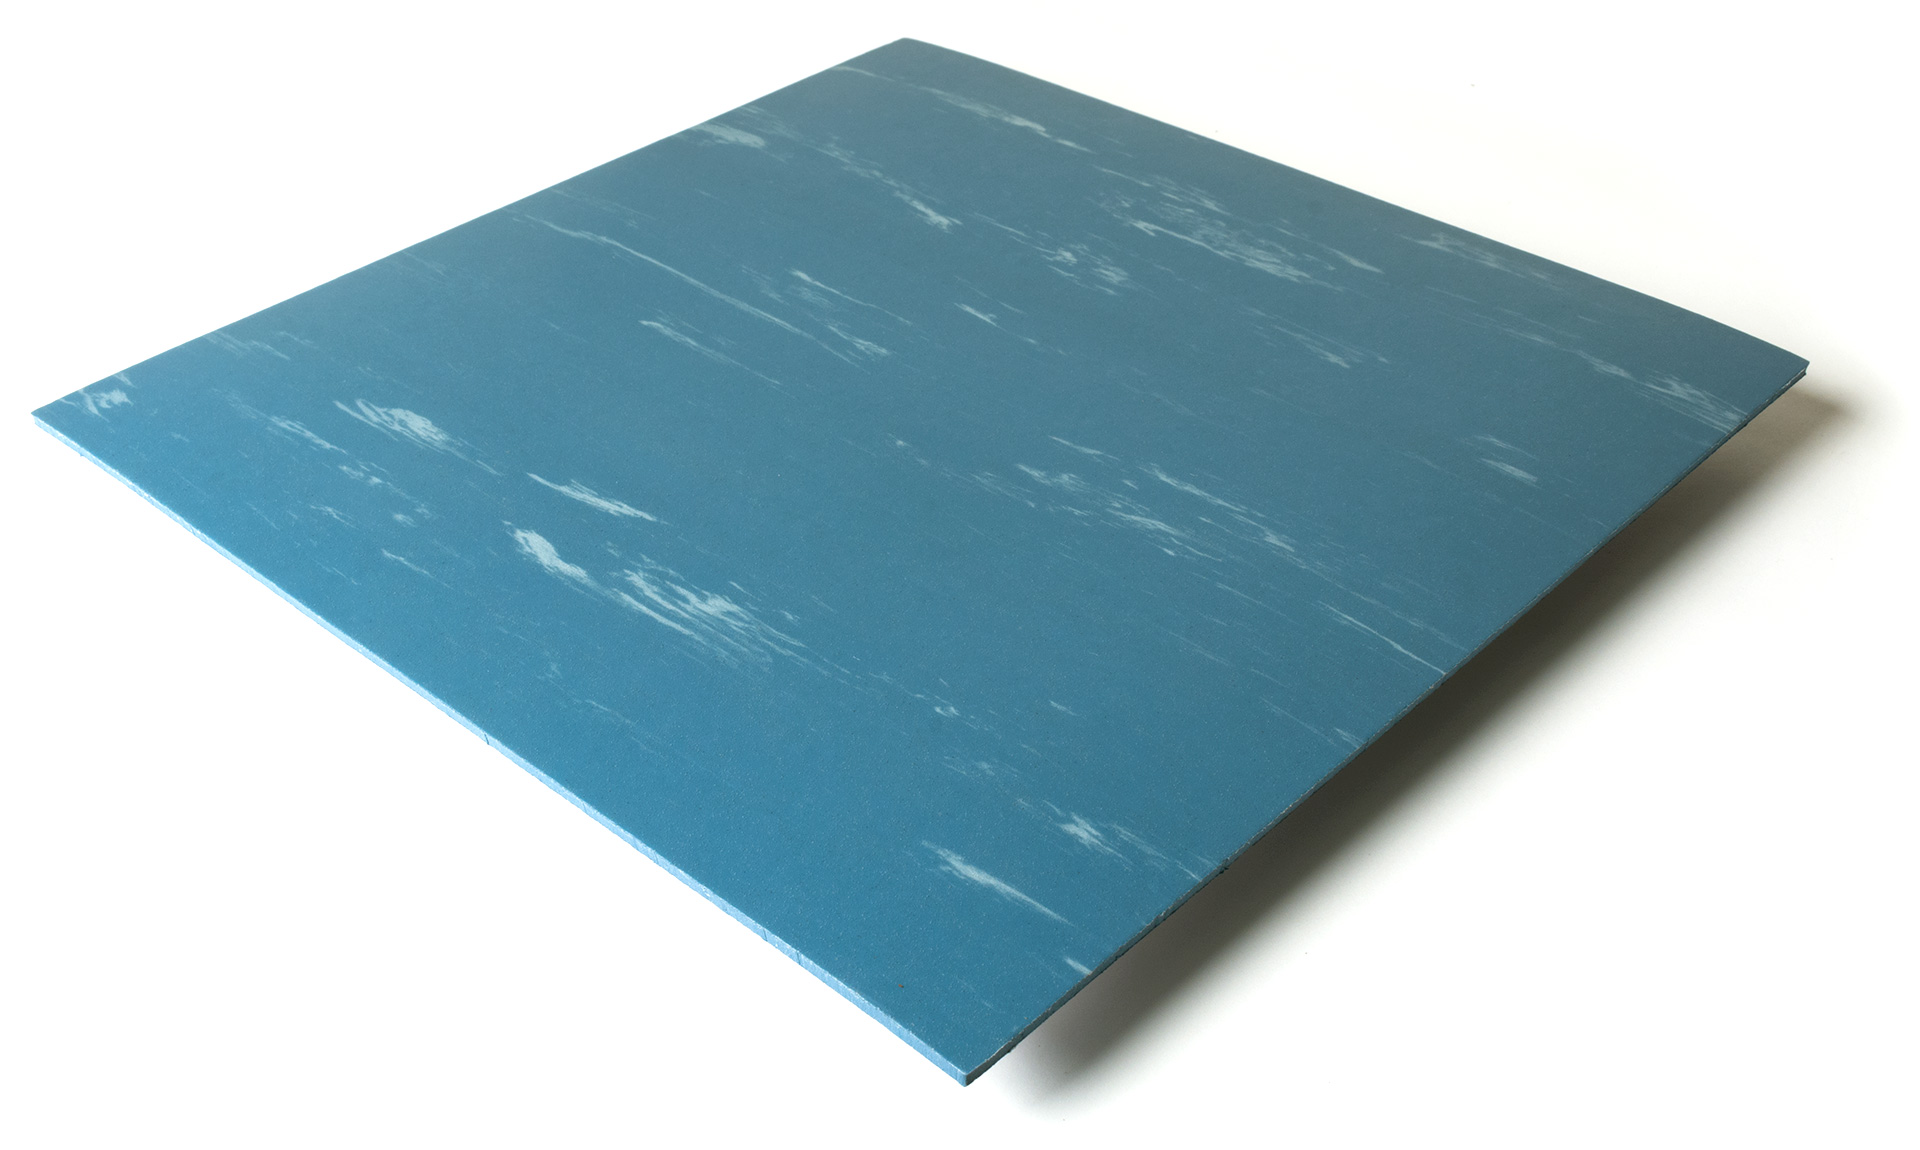 Standard transit flooring in marbled blue, smooth